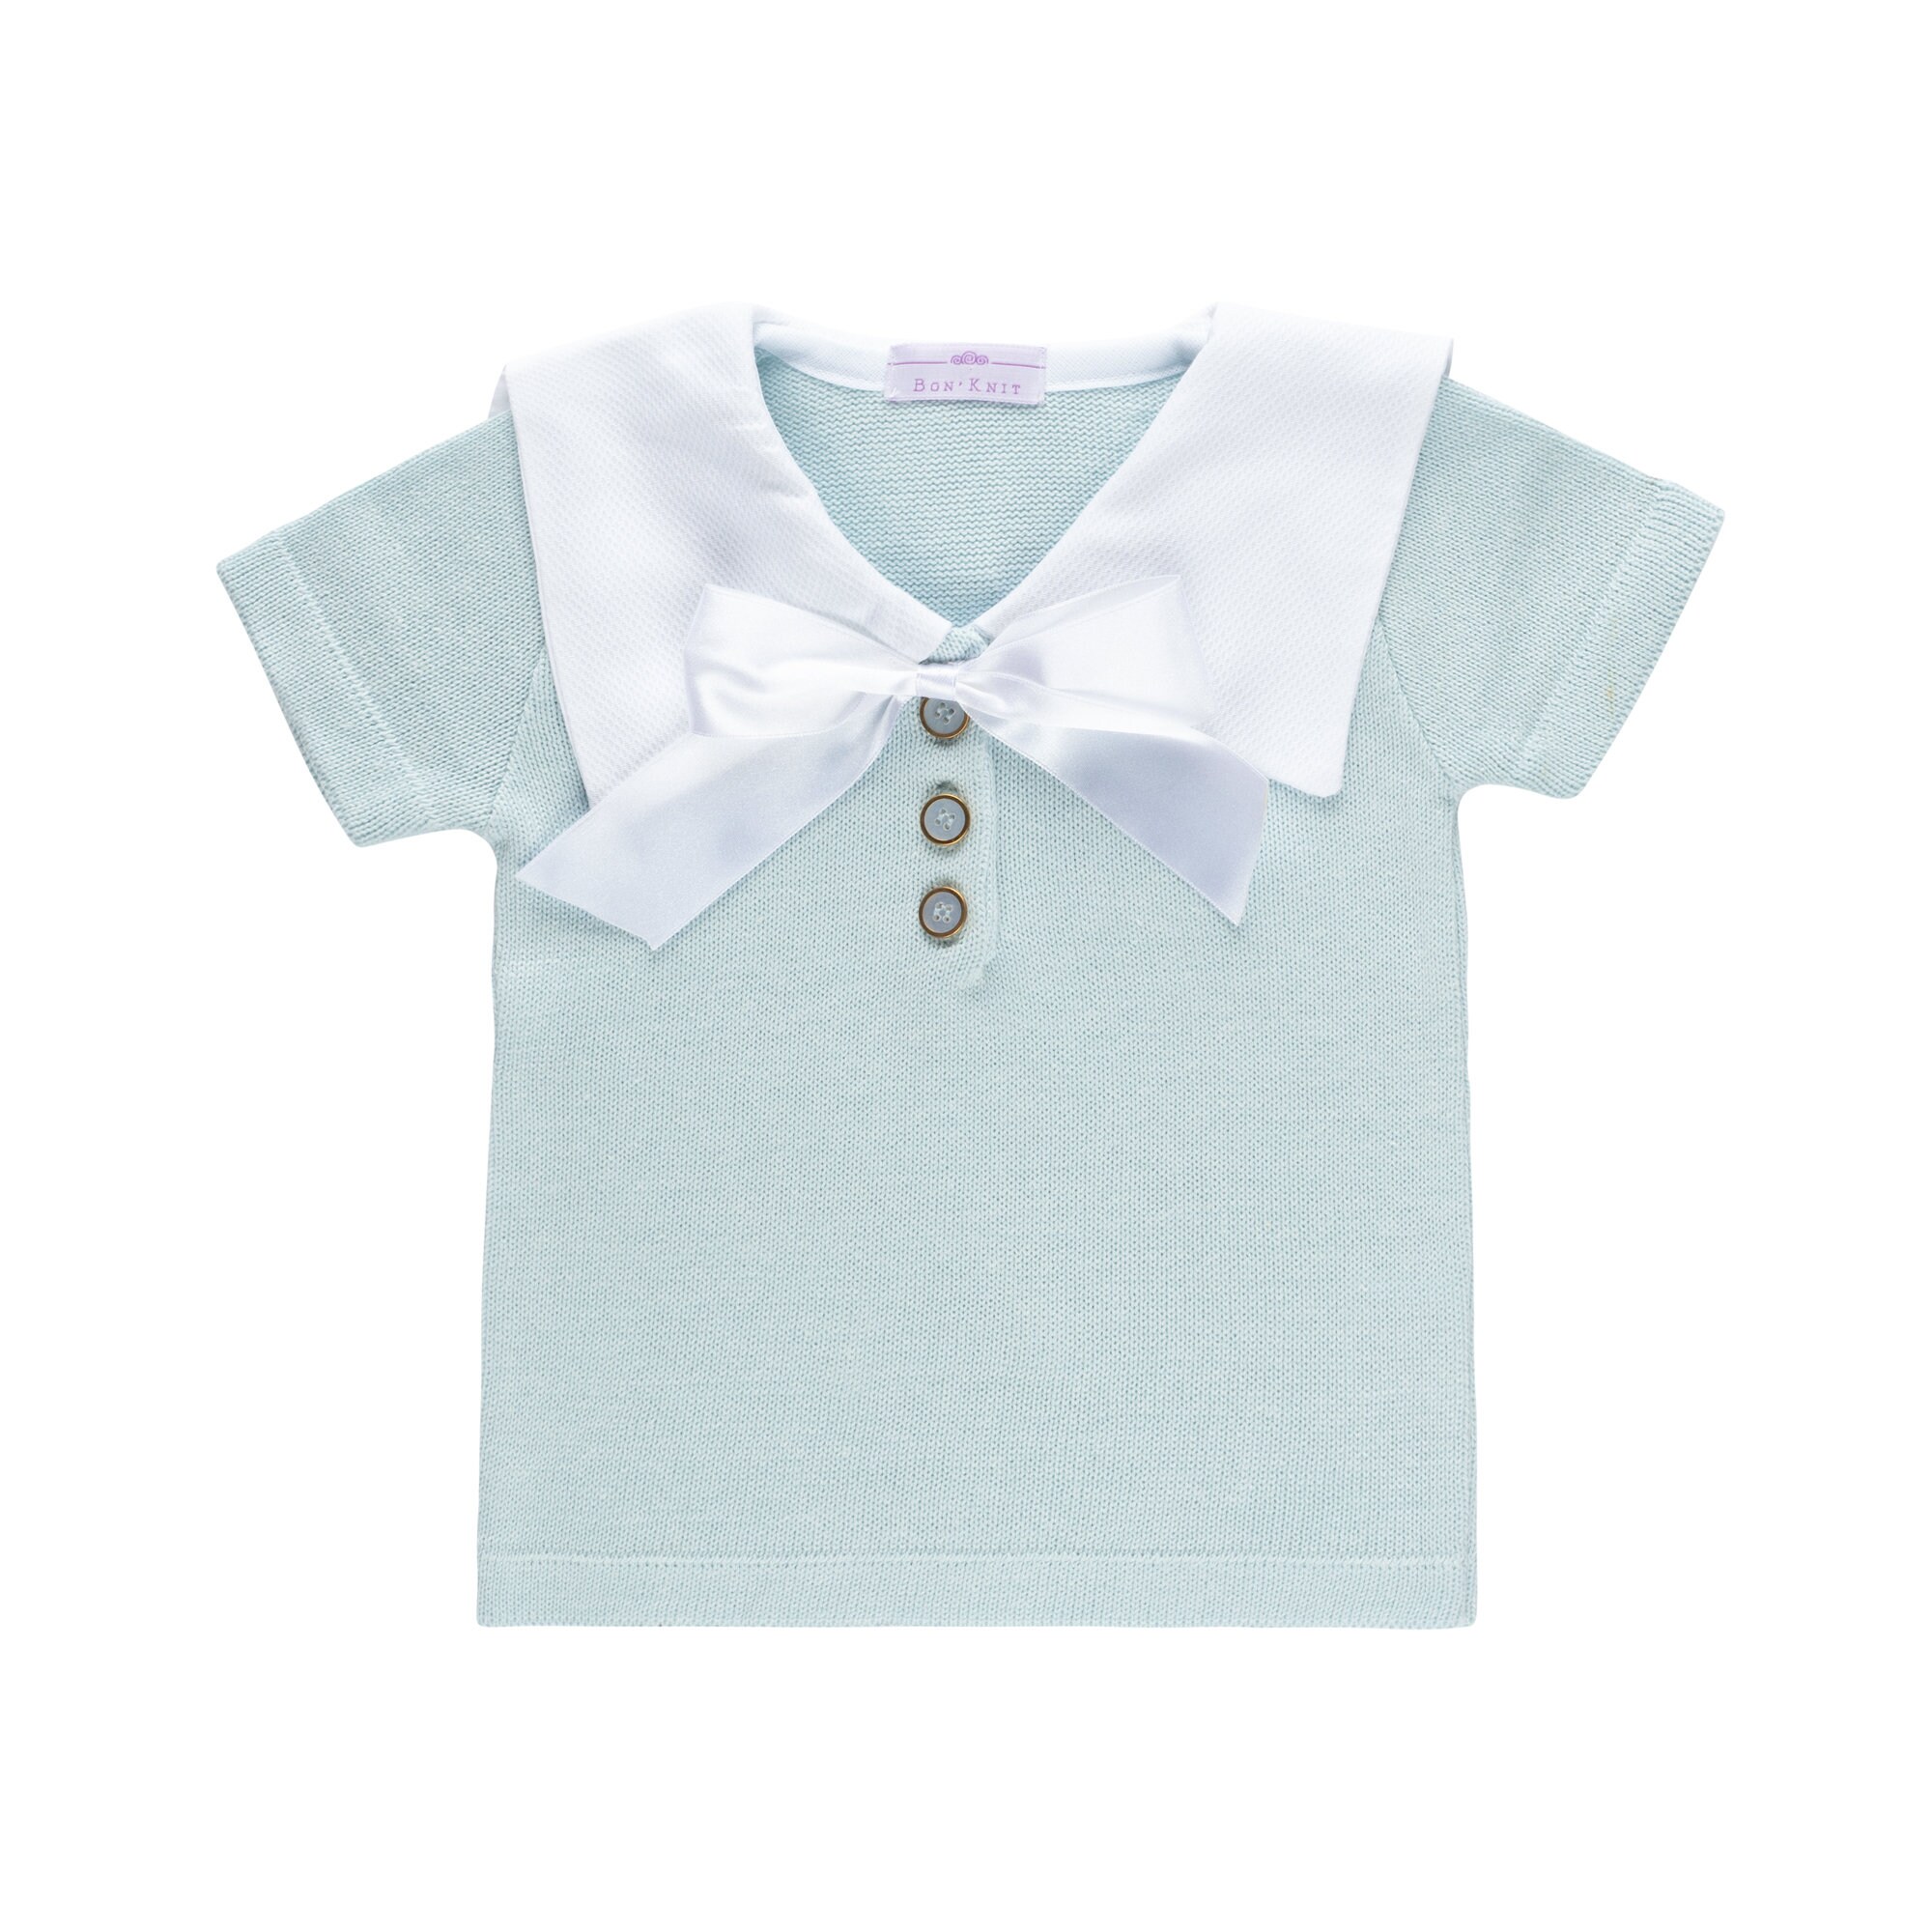 Toddler Spring Outfit Sailor Collar Tee for Kid's Archie Set Sea Blue Short Set in 3M Kleding Unisex kinderkleding Kledingsets Special Occasion Retro Inspired Short Set 6T 